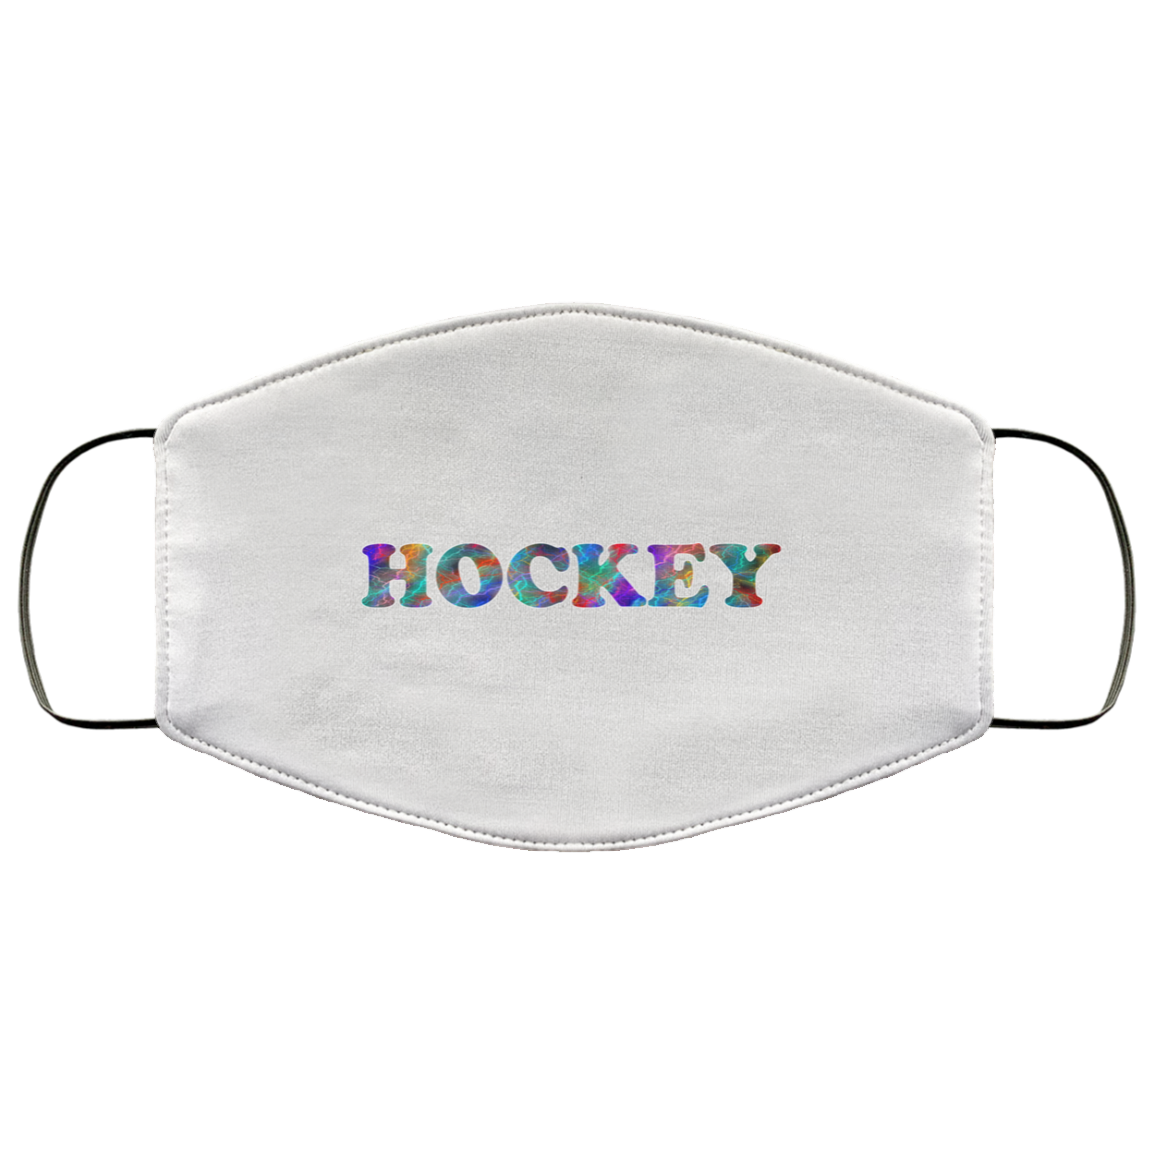 Hockey 2 Layer Protective Mask